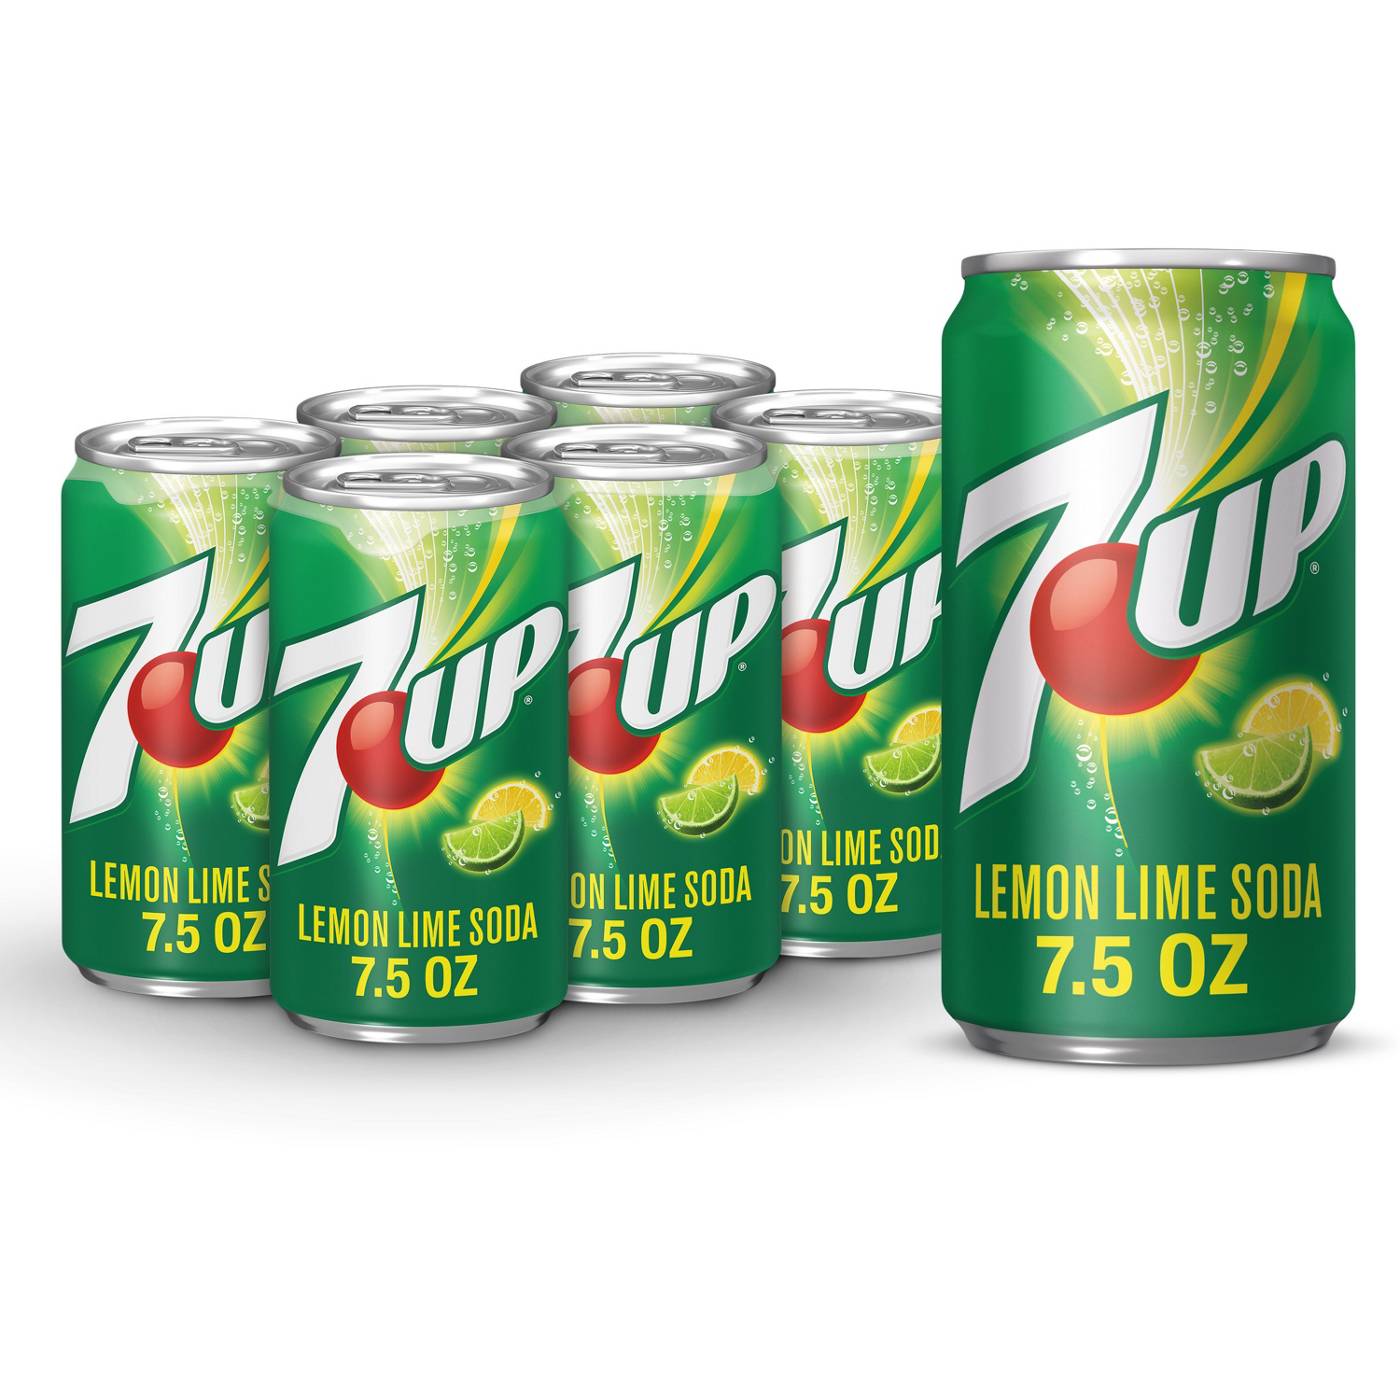 7UP Lemon Lime Soda 7.5 oz Cans; image 1 of 6